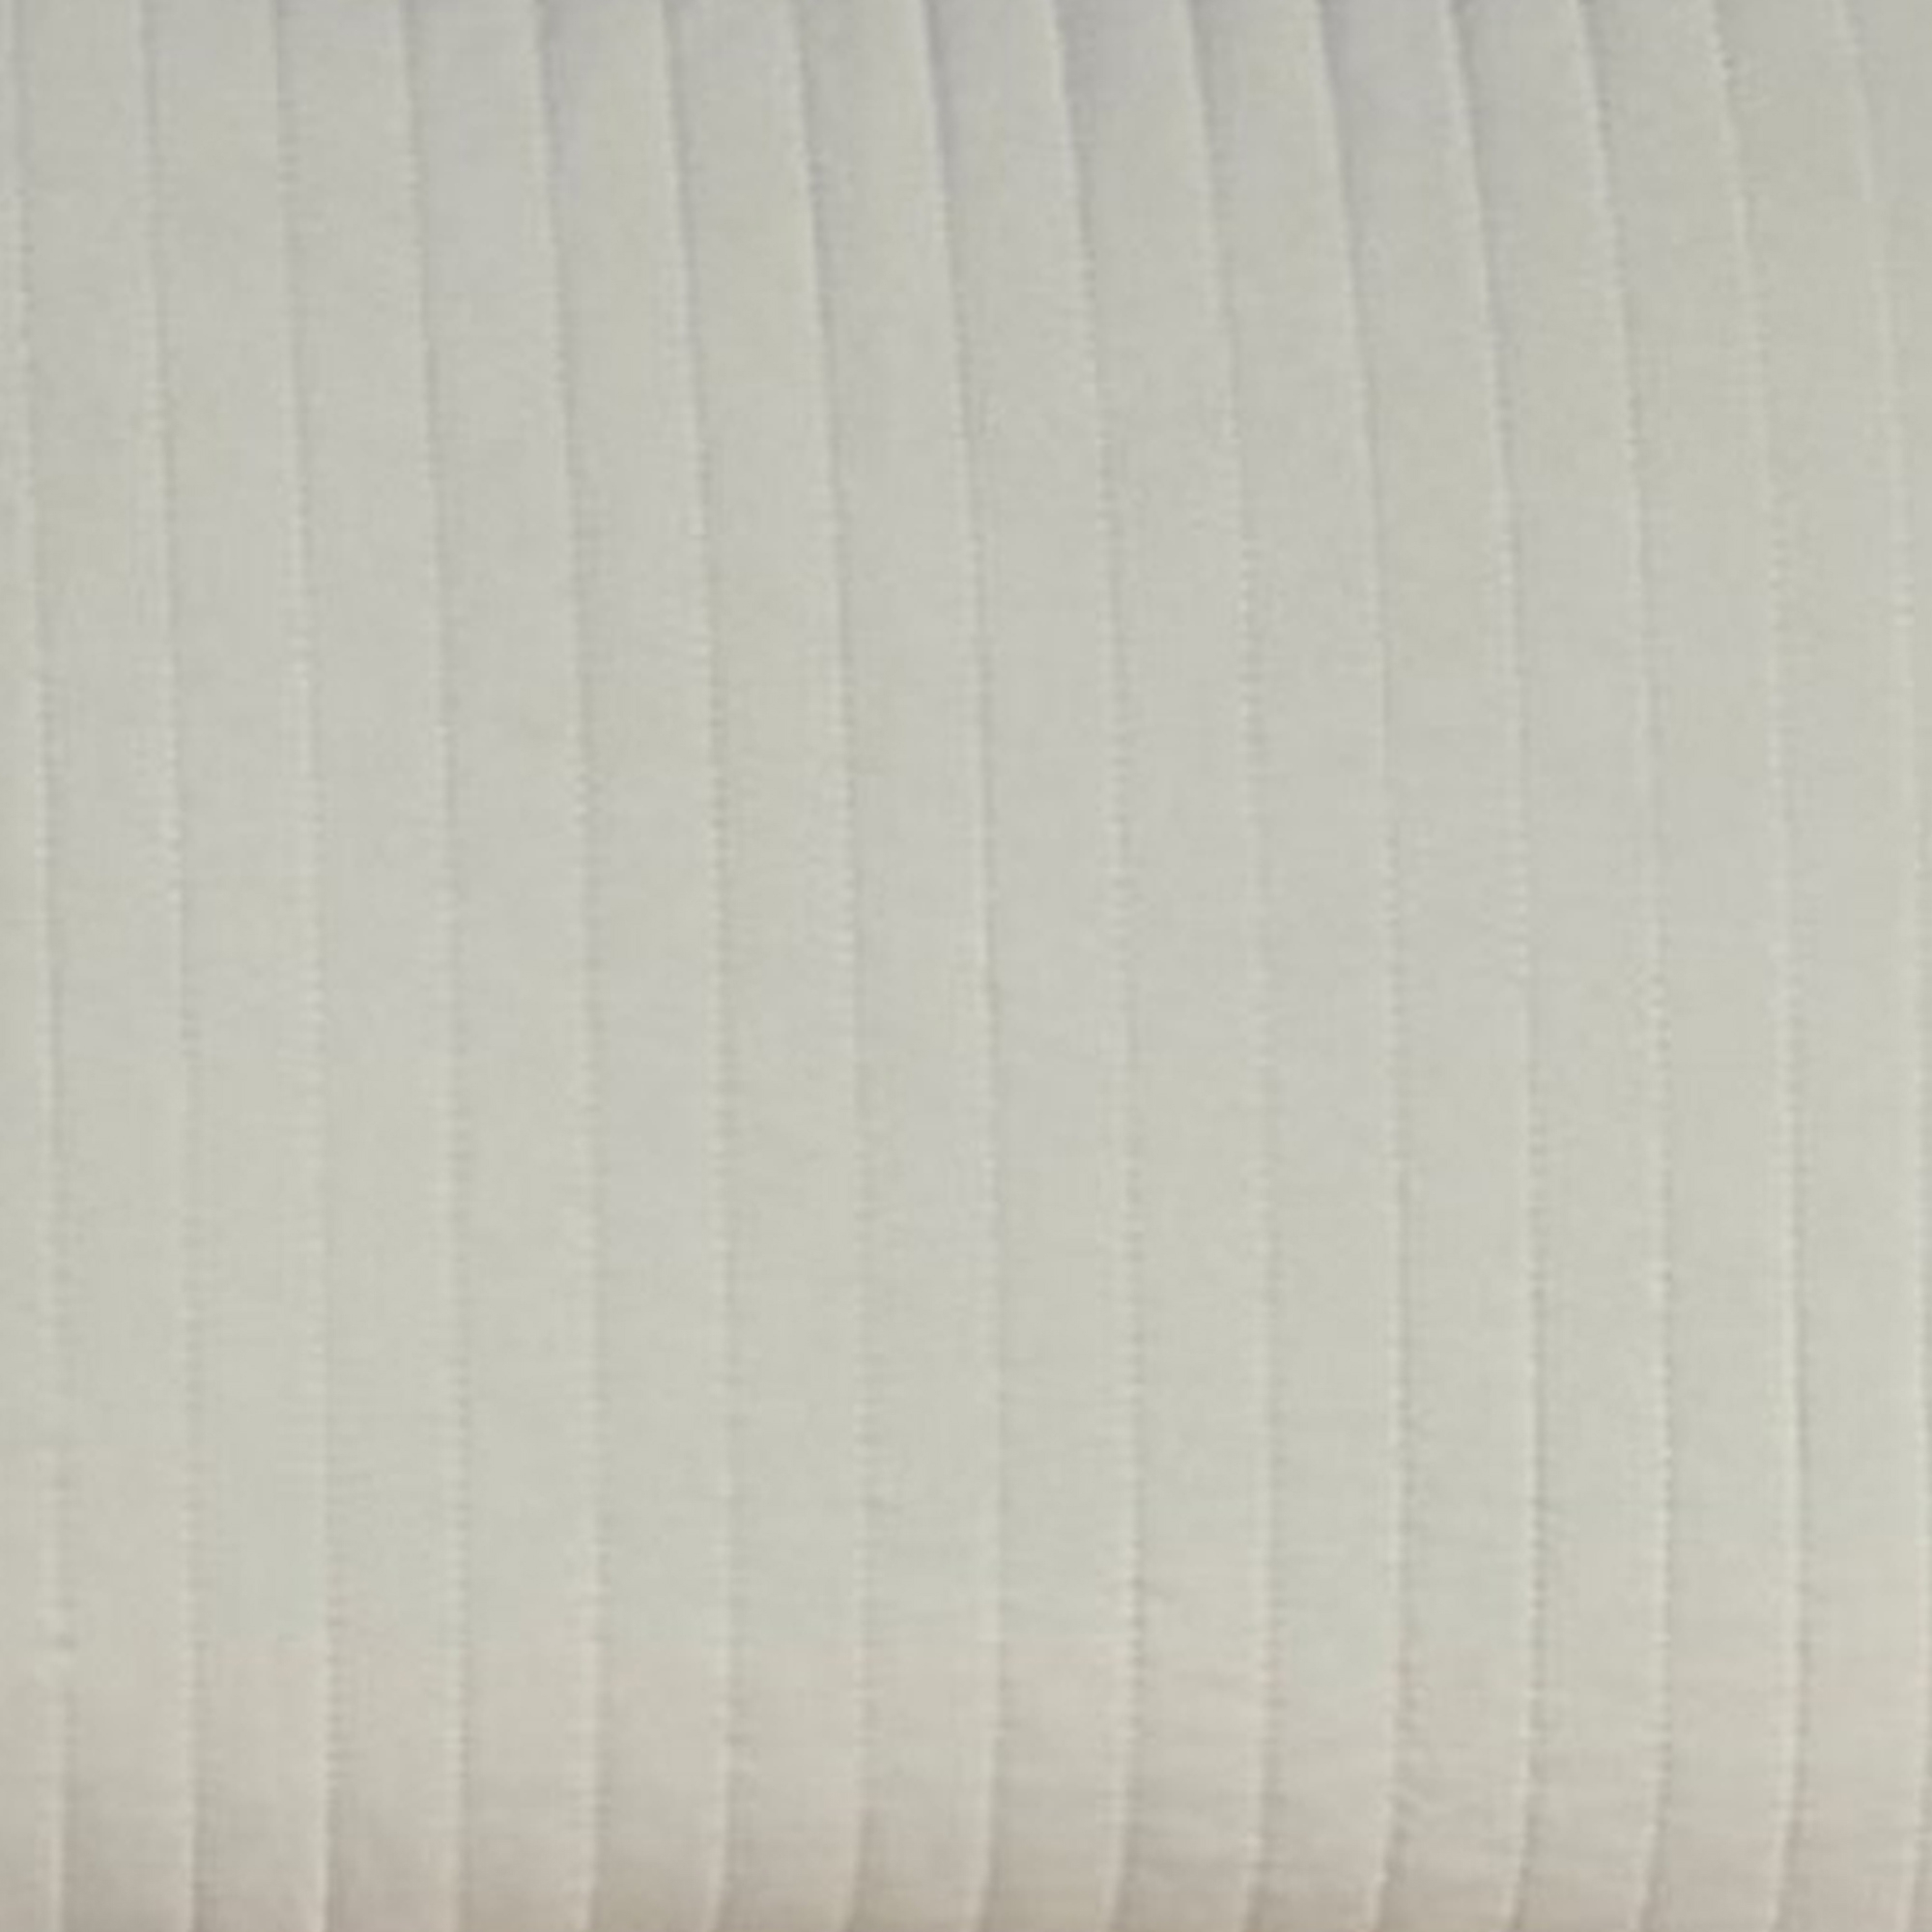 3 Piece Fabric Queen Coverlet Set With Vertical Channel Stitching, Cream- Saltoro Sherpi